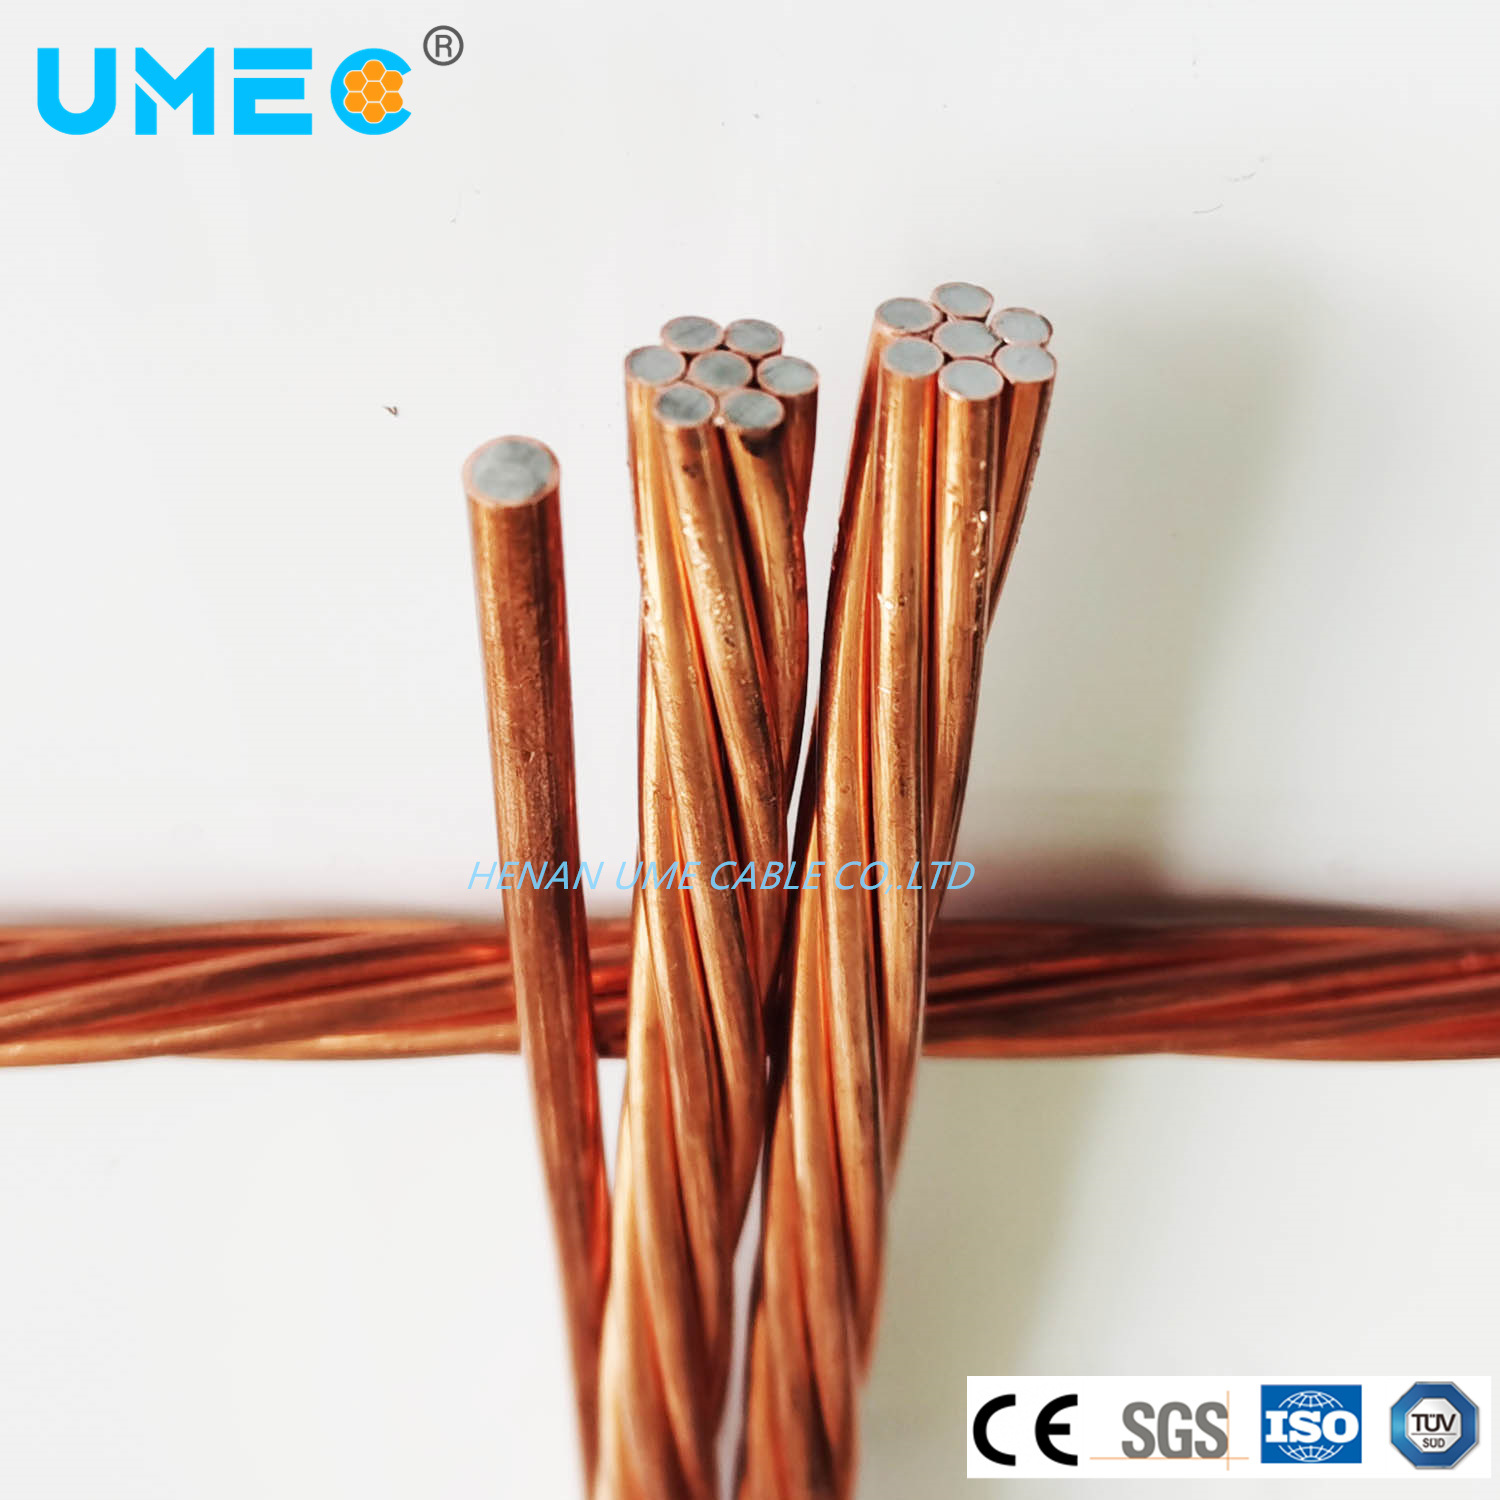 CCS 40% 30% 21% Conductivity 6AWG Strand Copper Clad Steel Wire